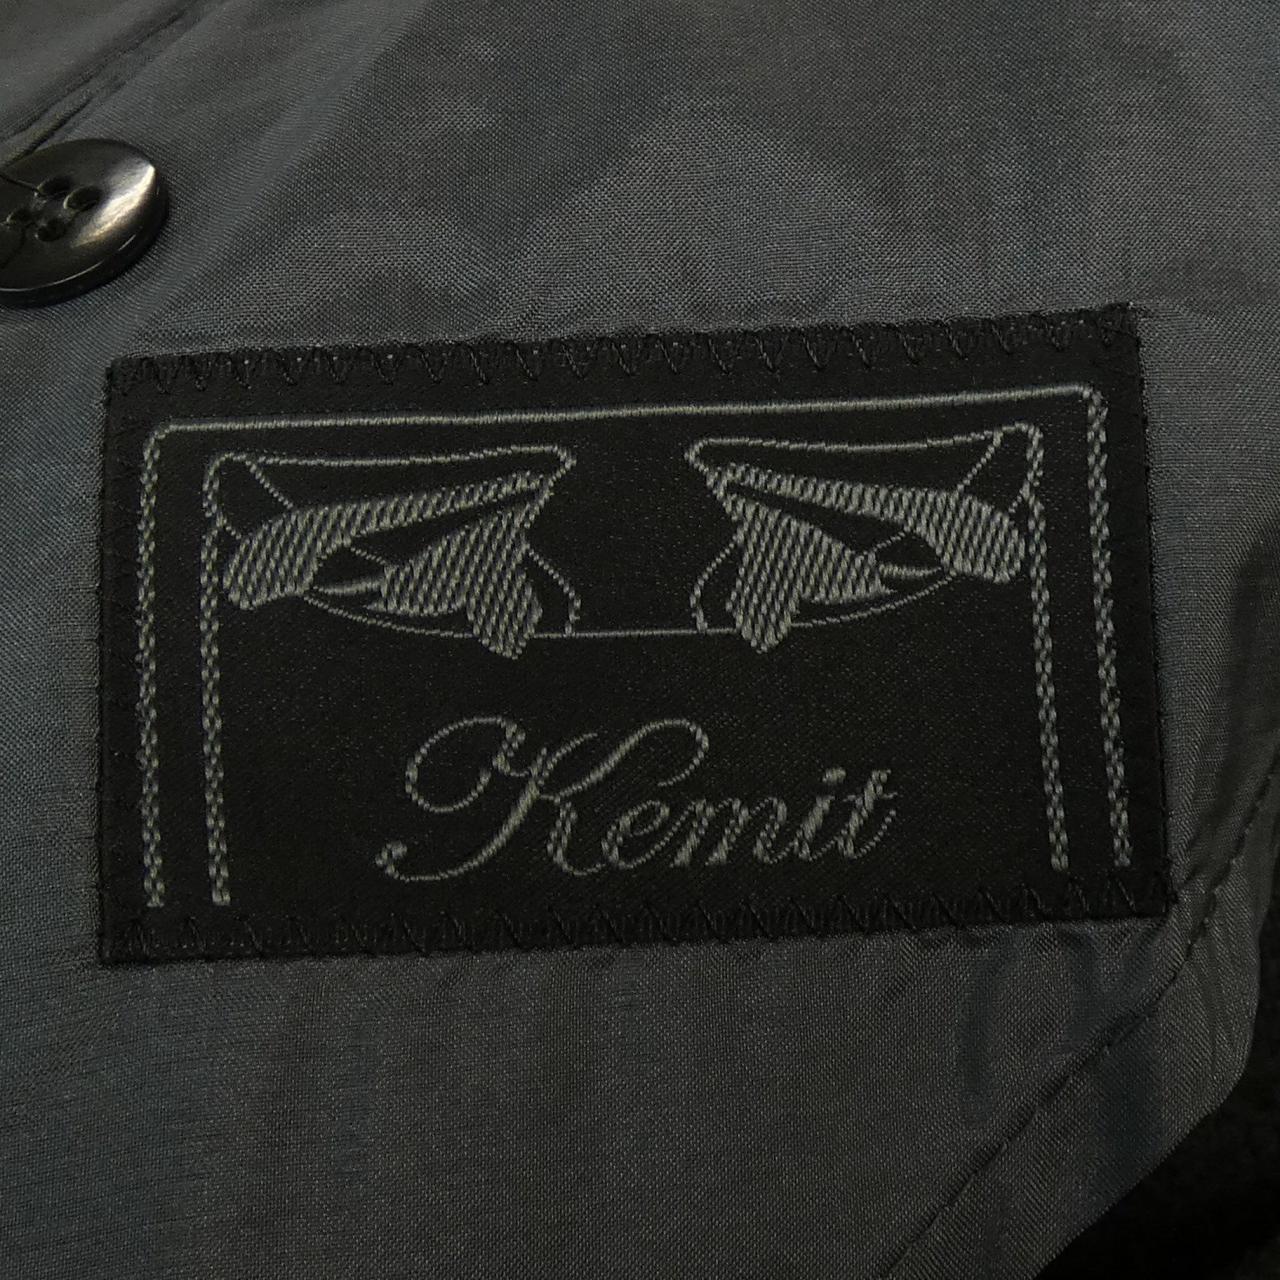 KEMIT jacket